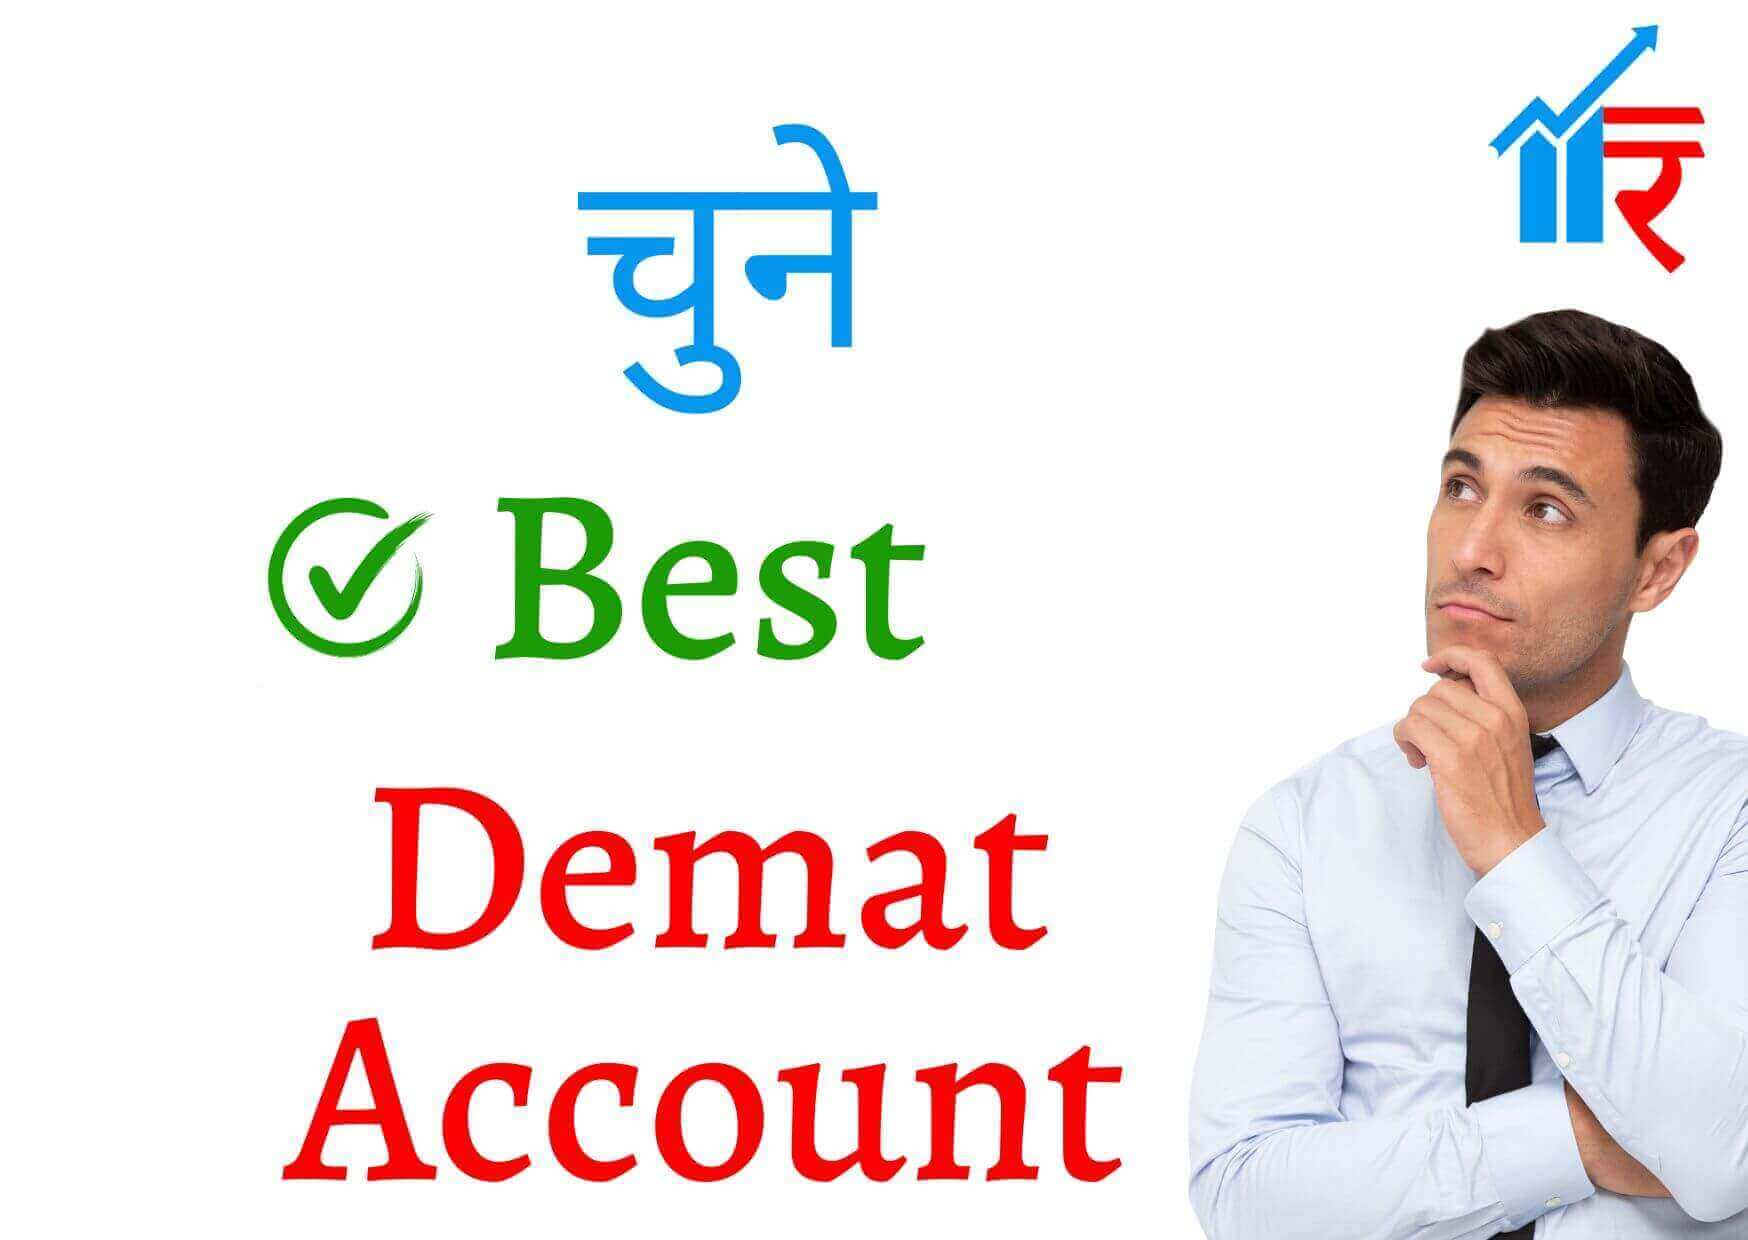 choose best demat accouunt